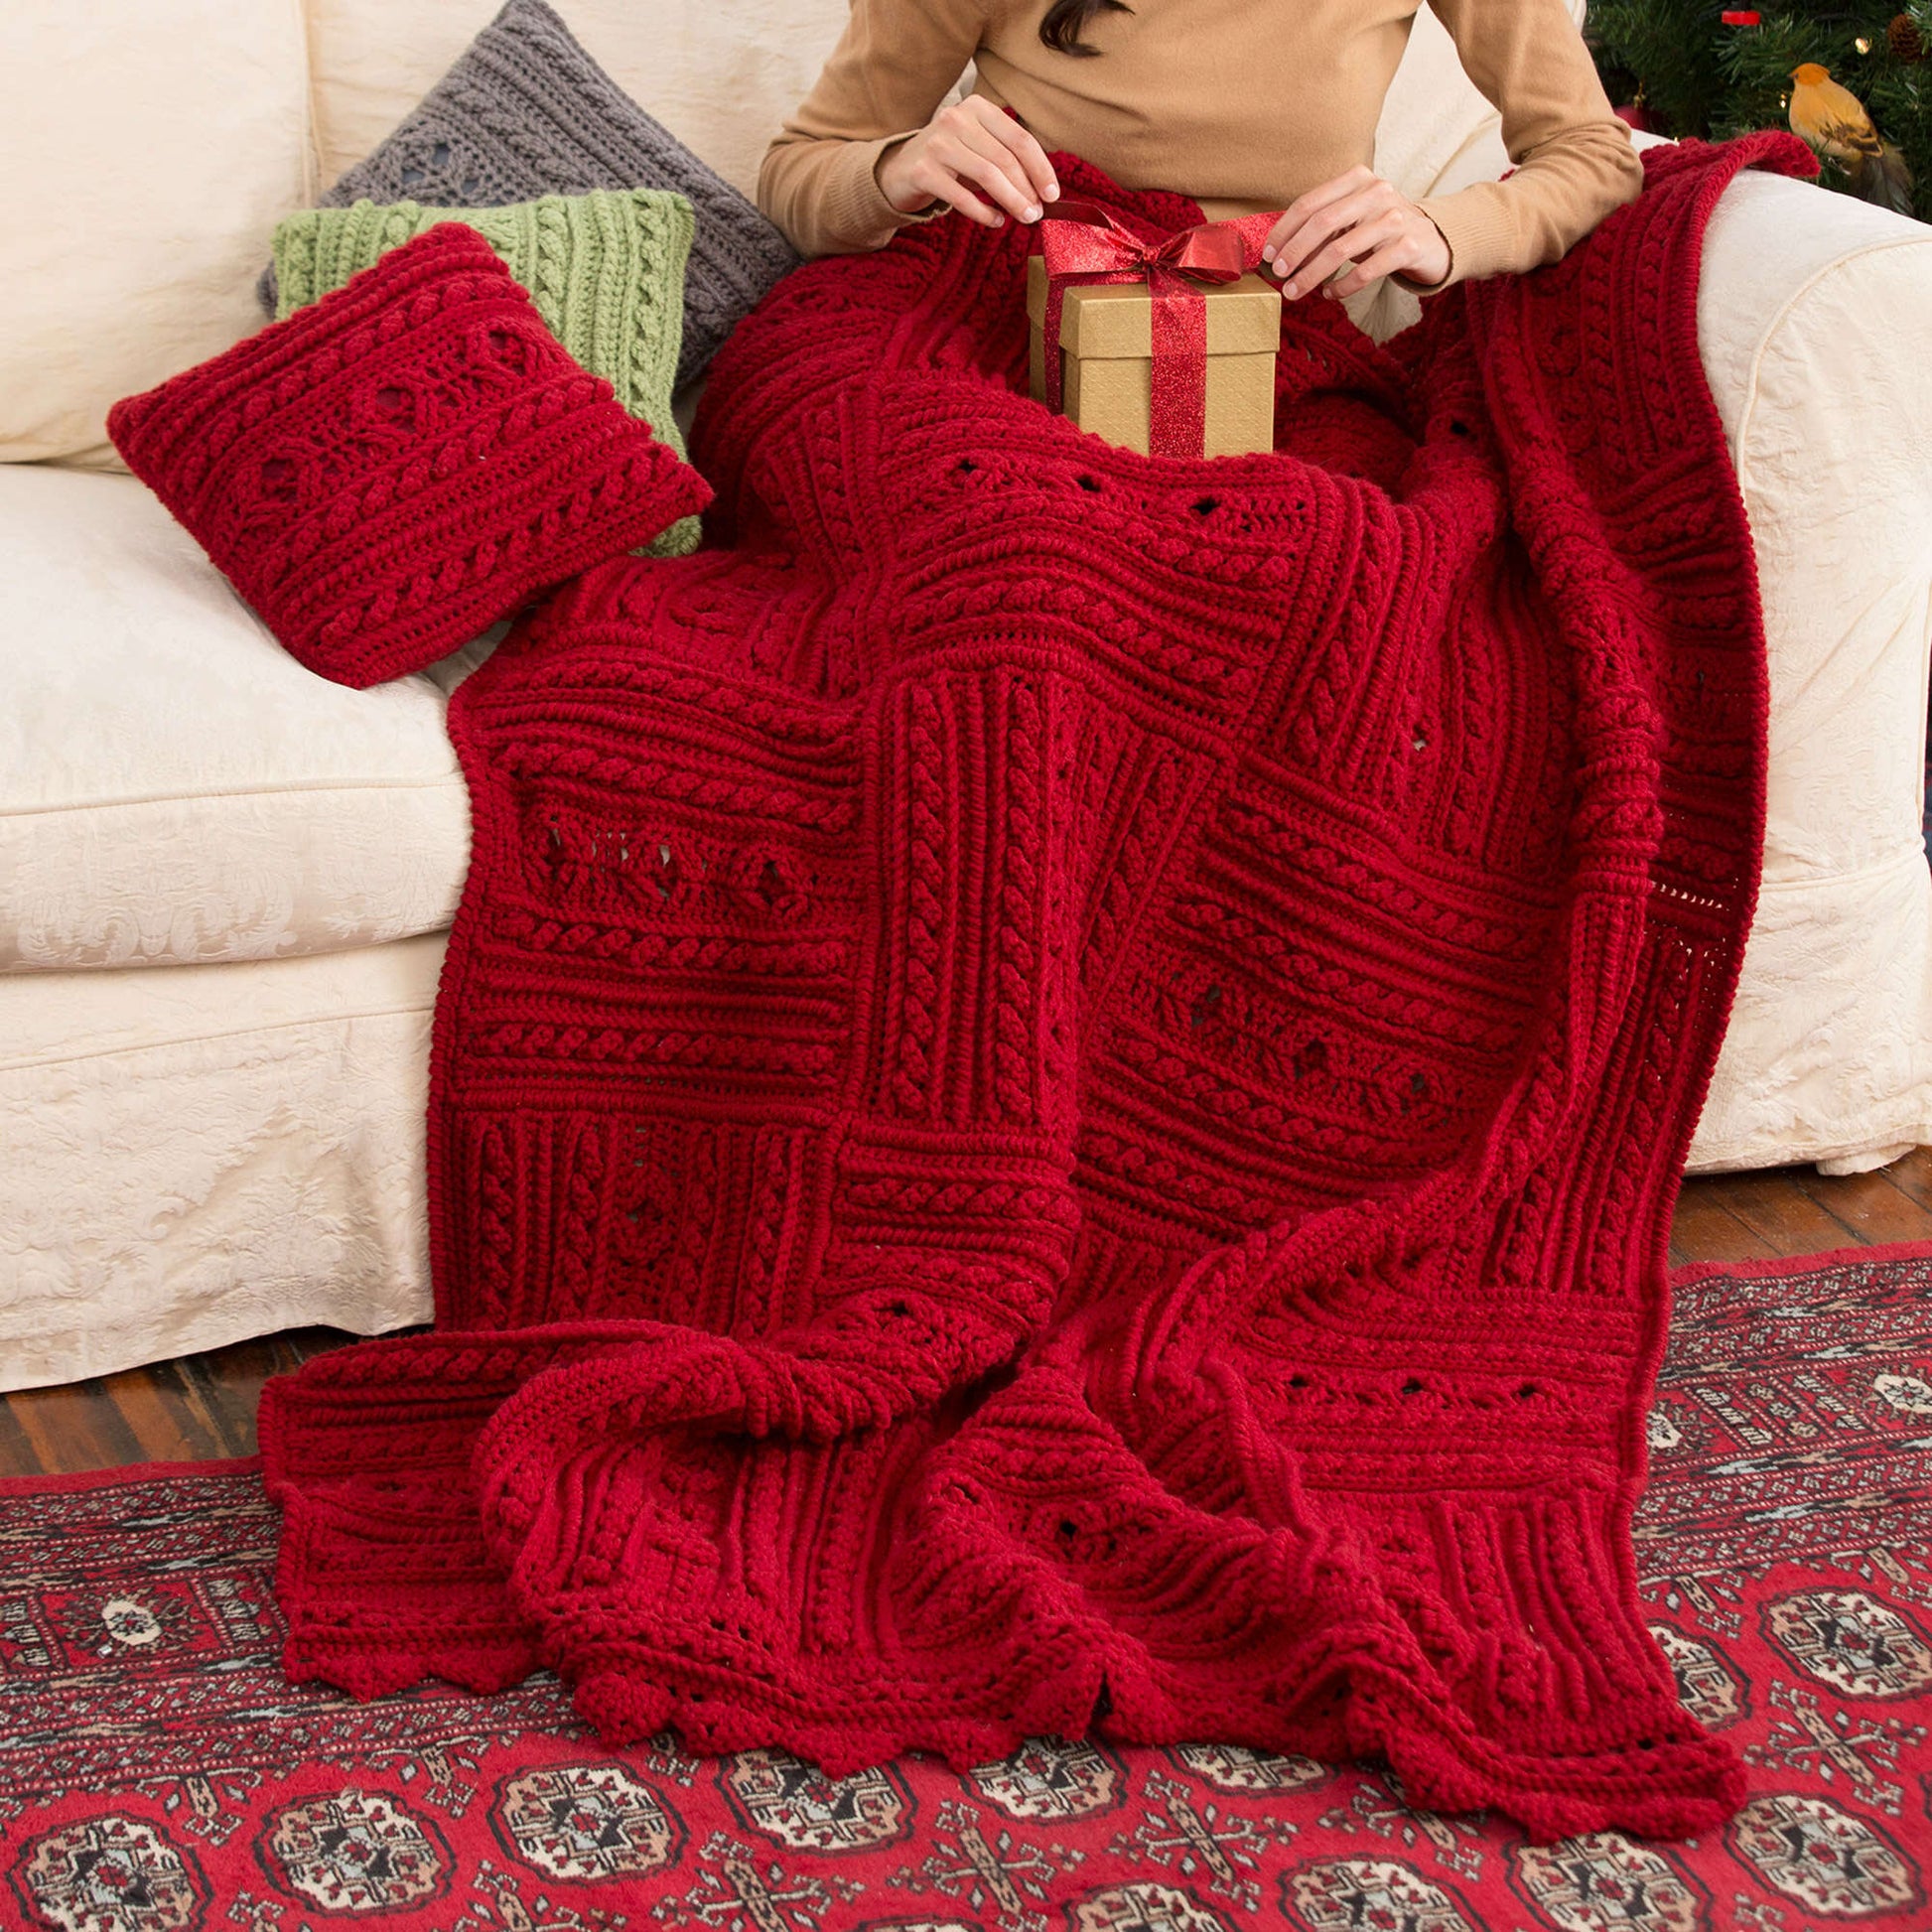 Free Red Heart Crochet Divine Textured Throw & Pillows Pattern